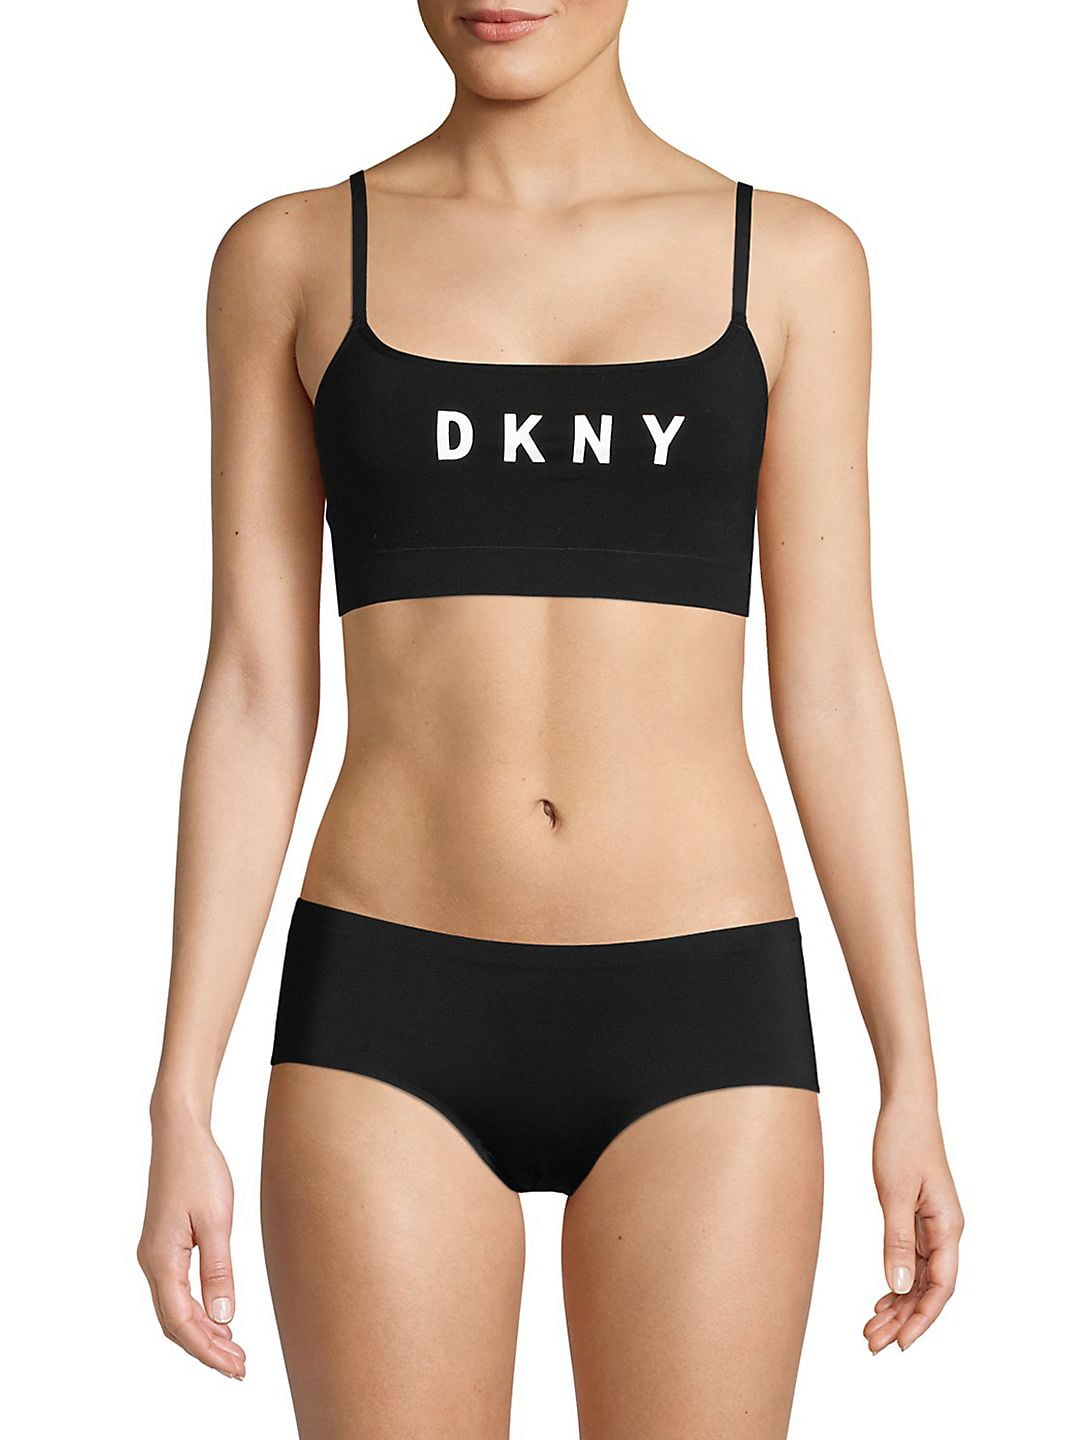 DKNY Intimates Mix Match Seamless Scoop Bralette Black/White